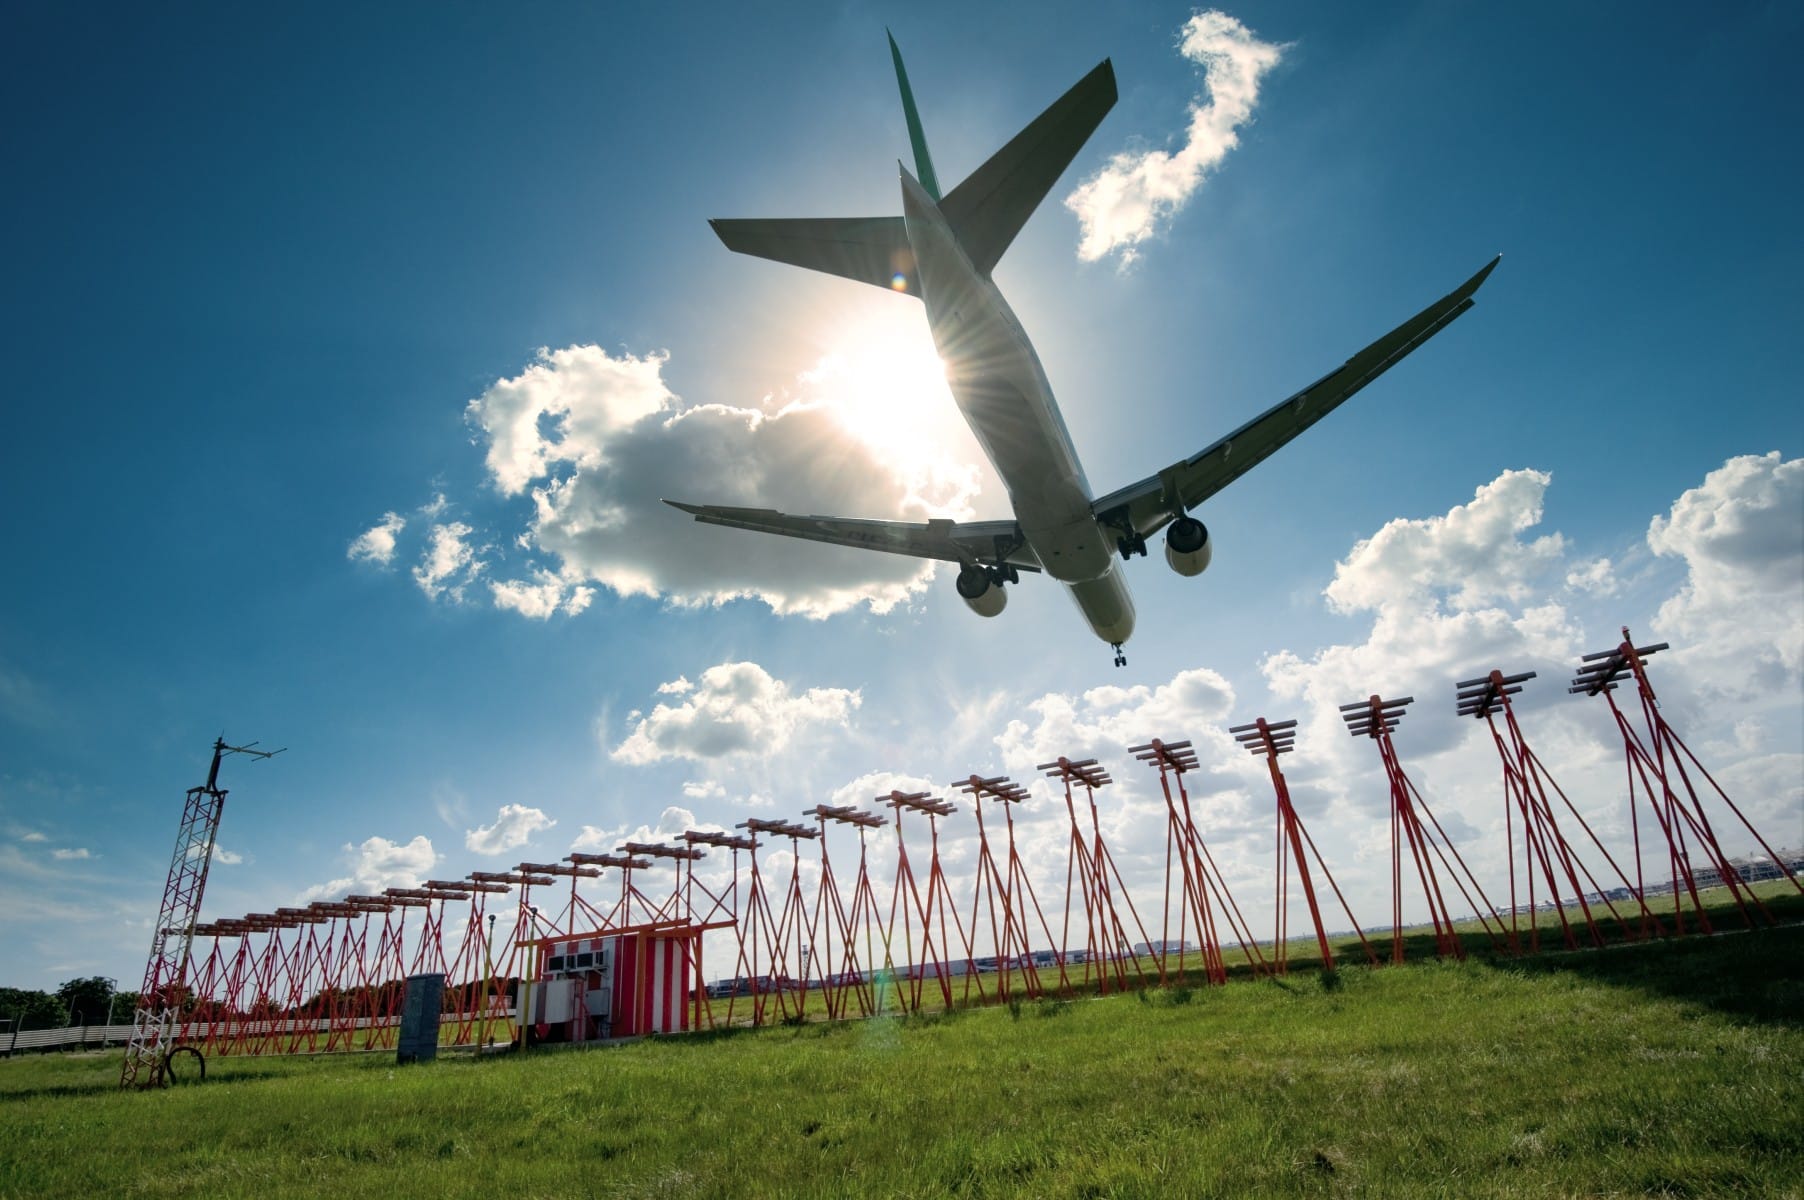 Heathrow Plan Zero Carbon Neutral Descarbonise Sustainability Planet Climat Change Airports Airplanes Travel